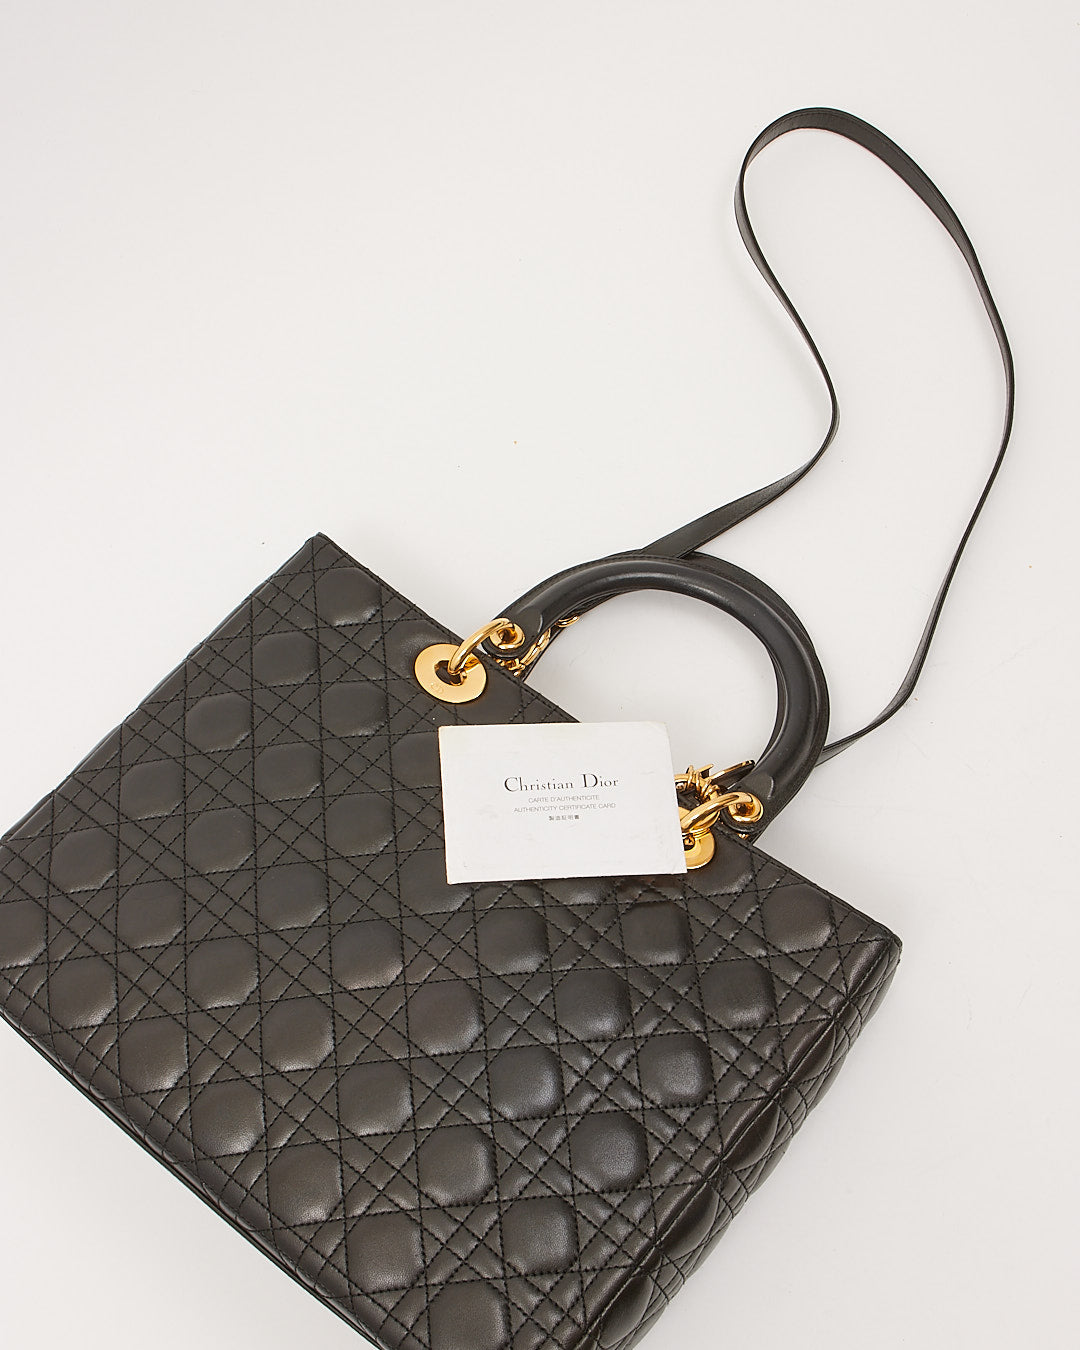 Grand sac à poignée supérieure Lady Dior Cannage noir Dior